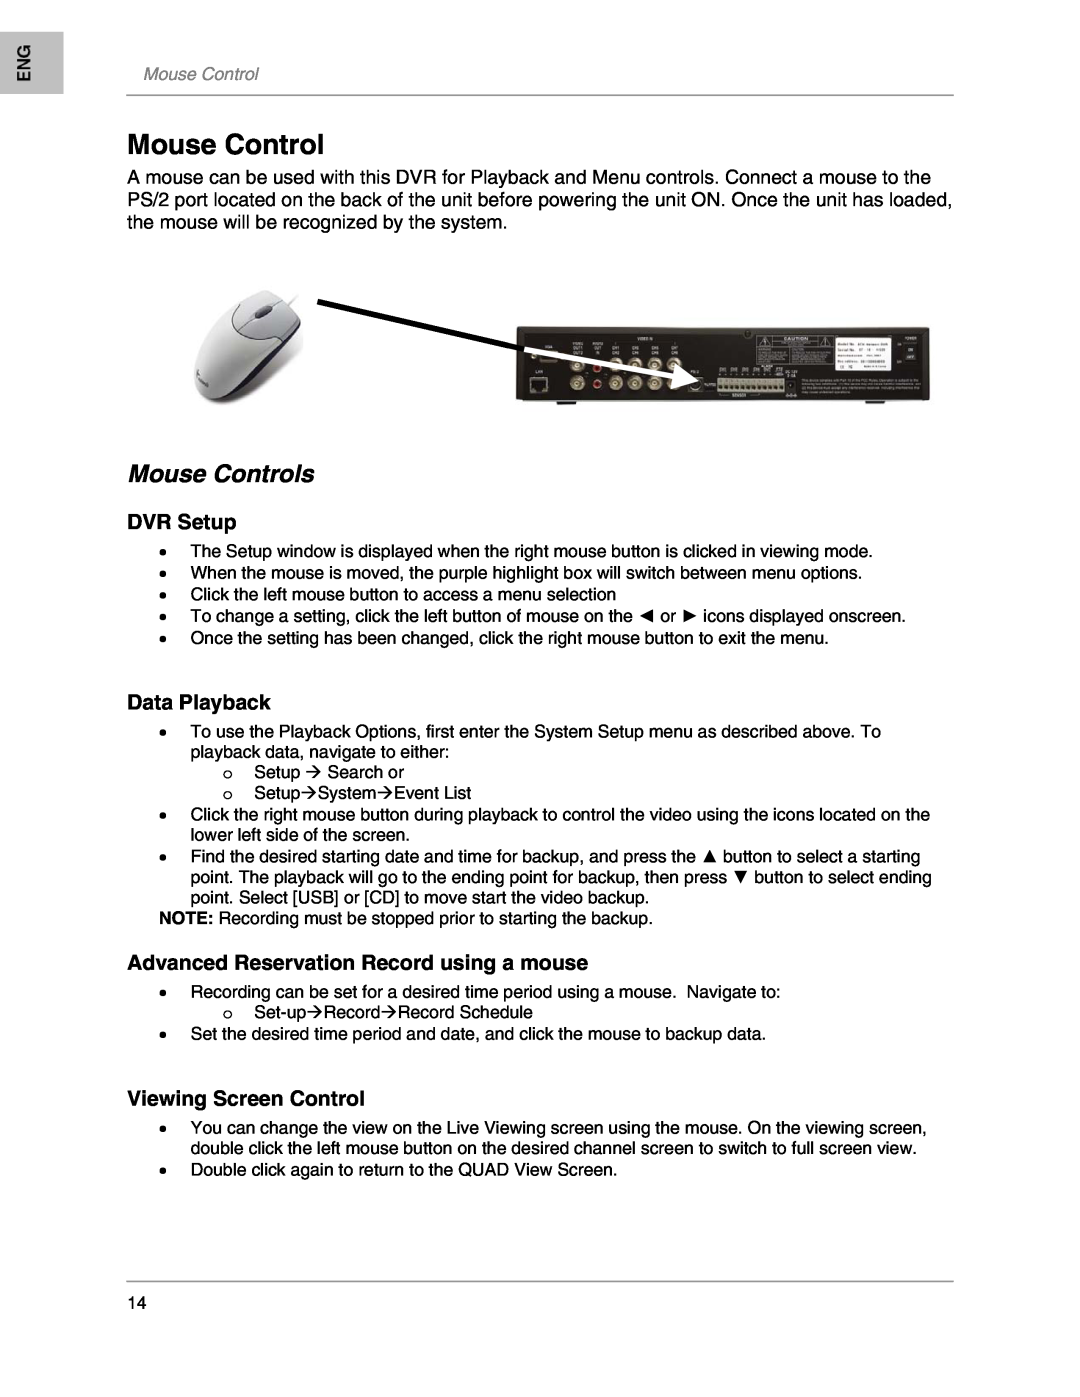 LOREX Technology L208, L204 Mouse Controls, DVR Setup, Data Playback, Advanced Reservation Record using a mouse 